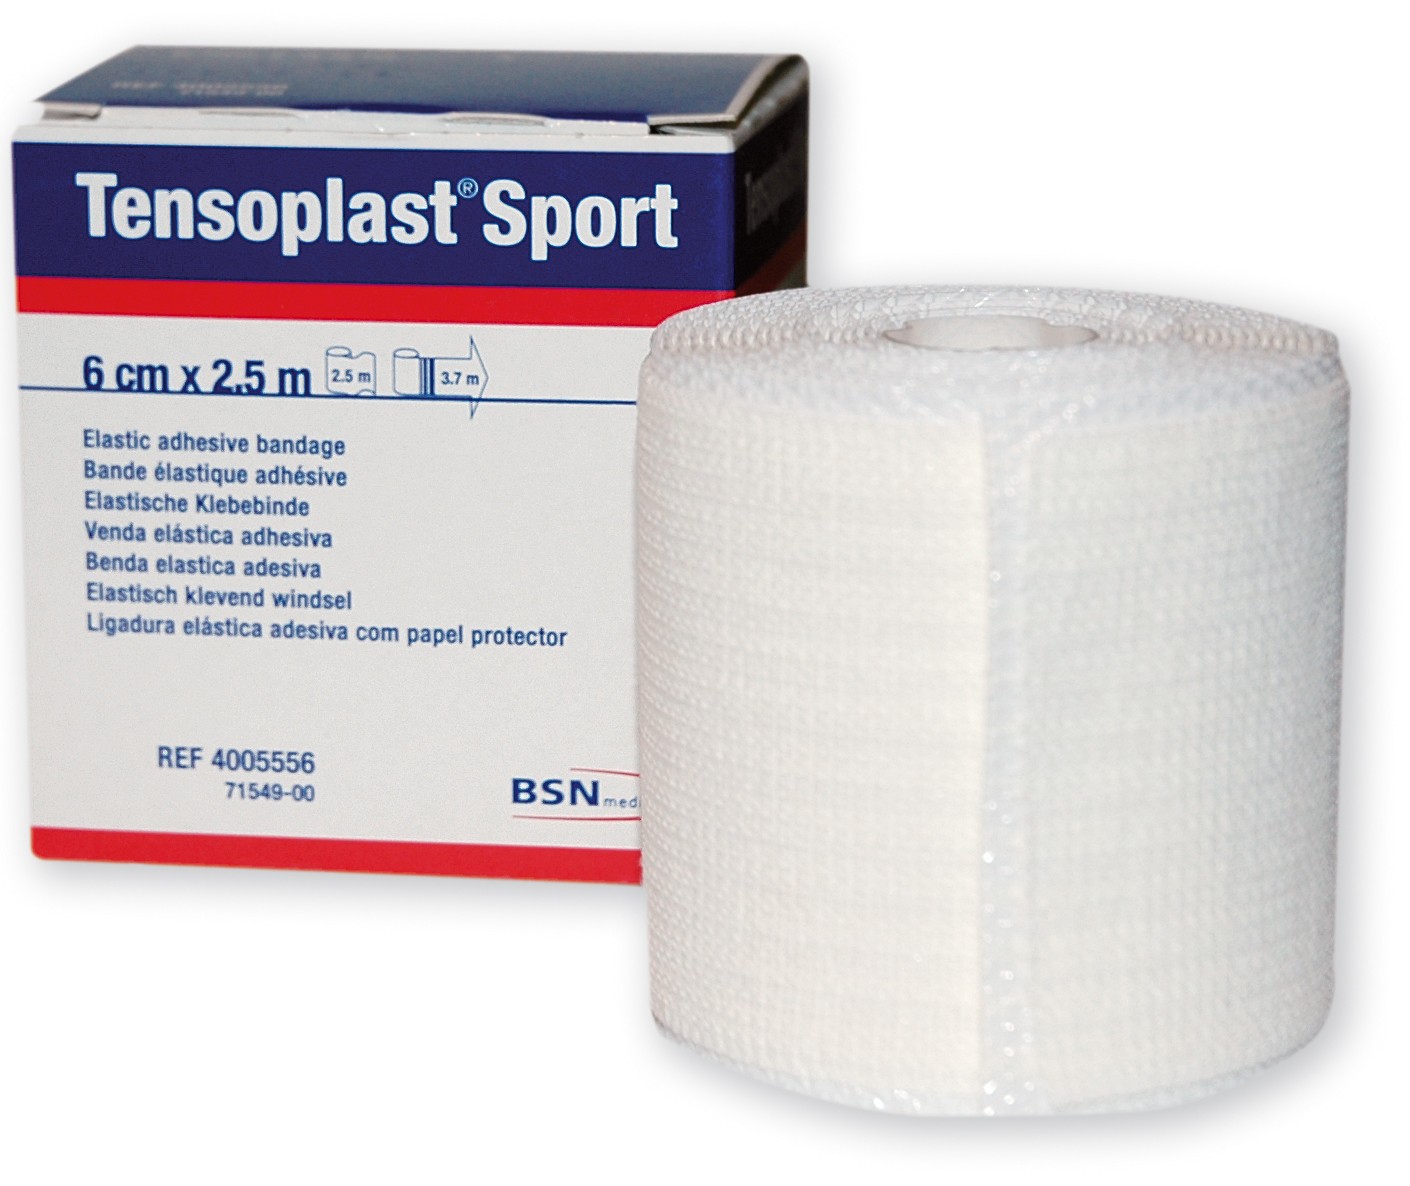 Tensoplast Sport. Venda elástica adhesiva para Strapping. 8 cm x 2,5 m